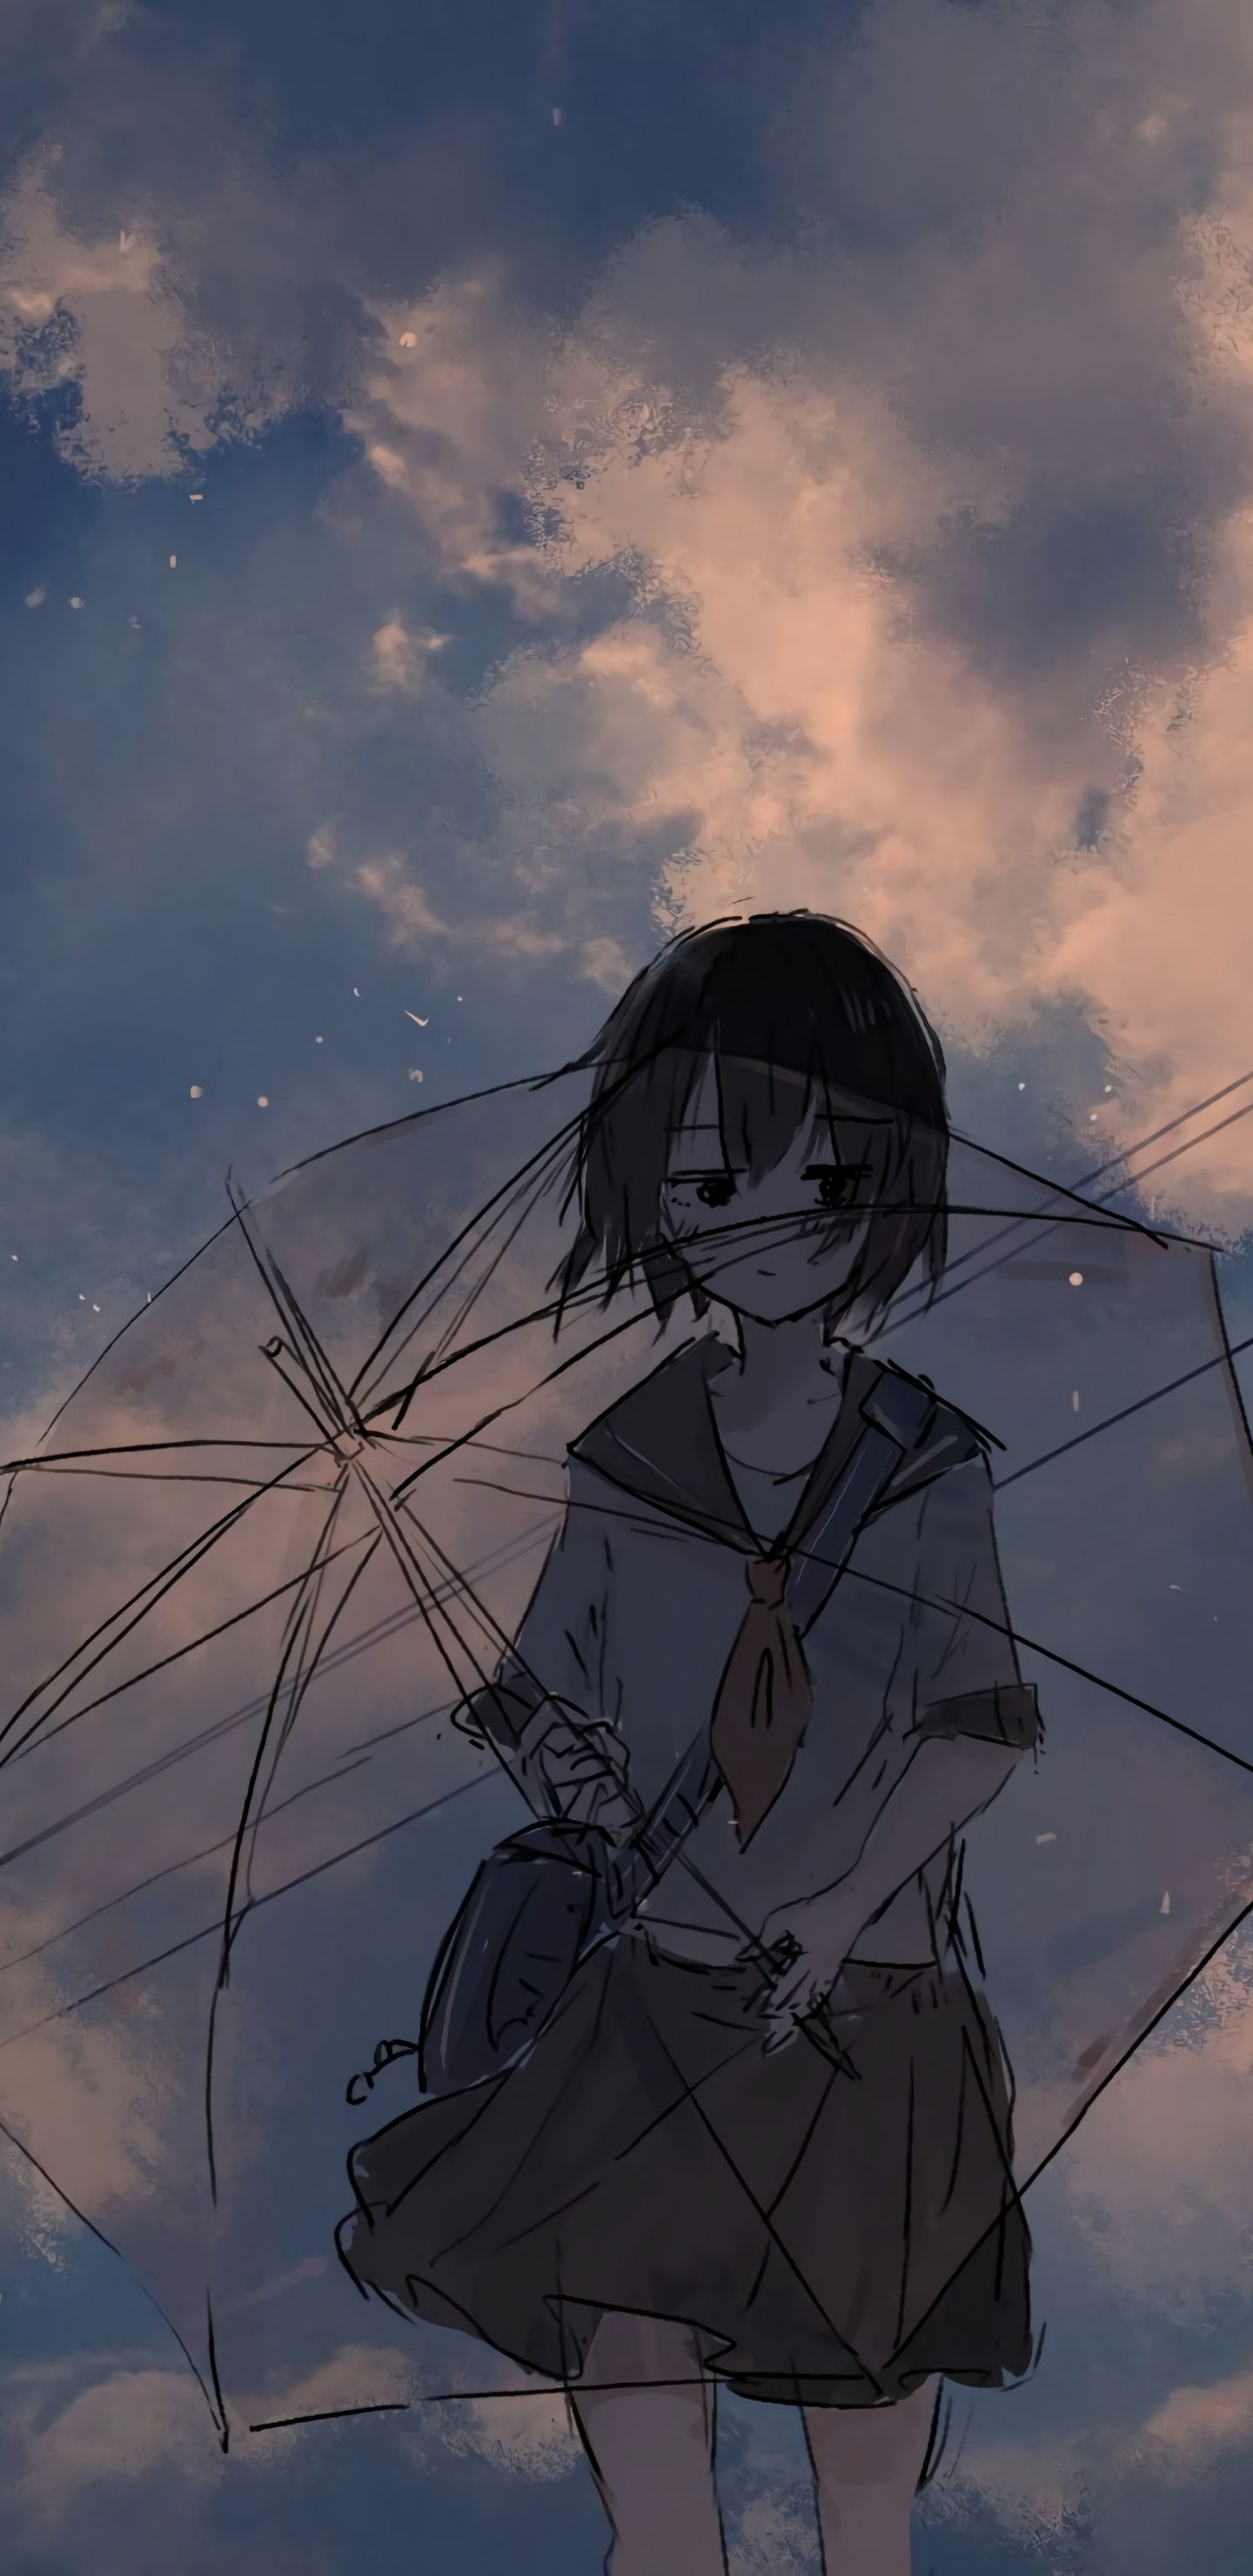 Anime girl with umbrella under the sky - Anime